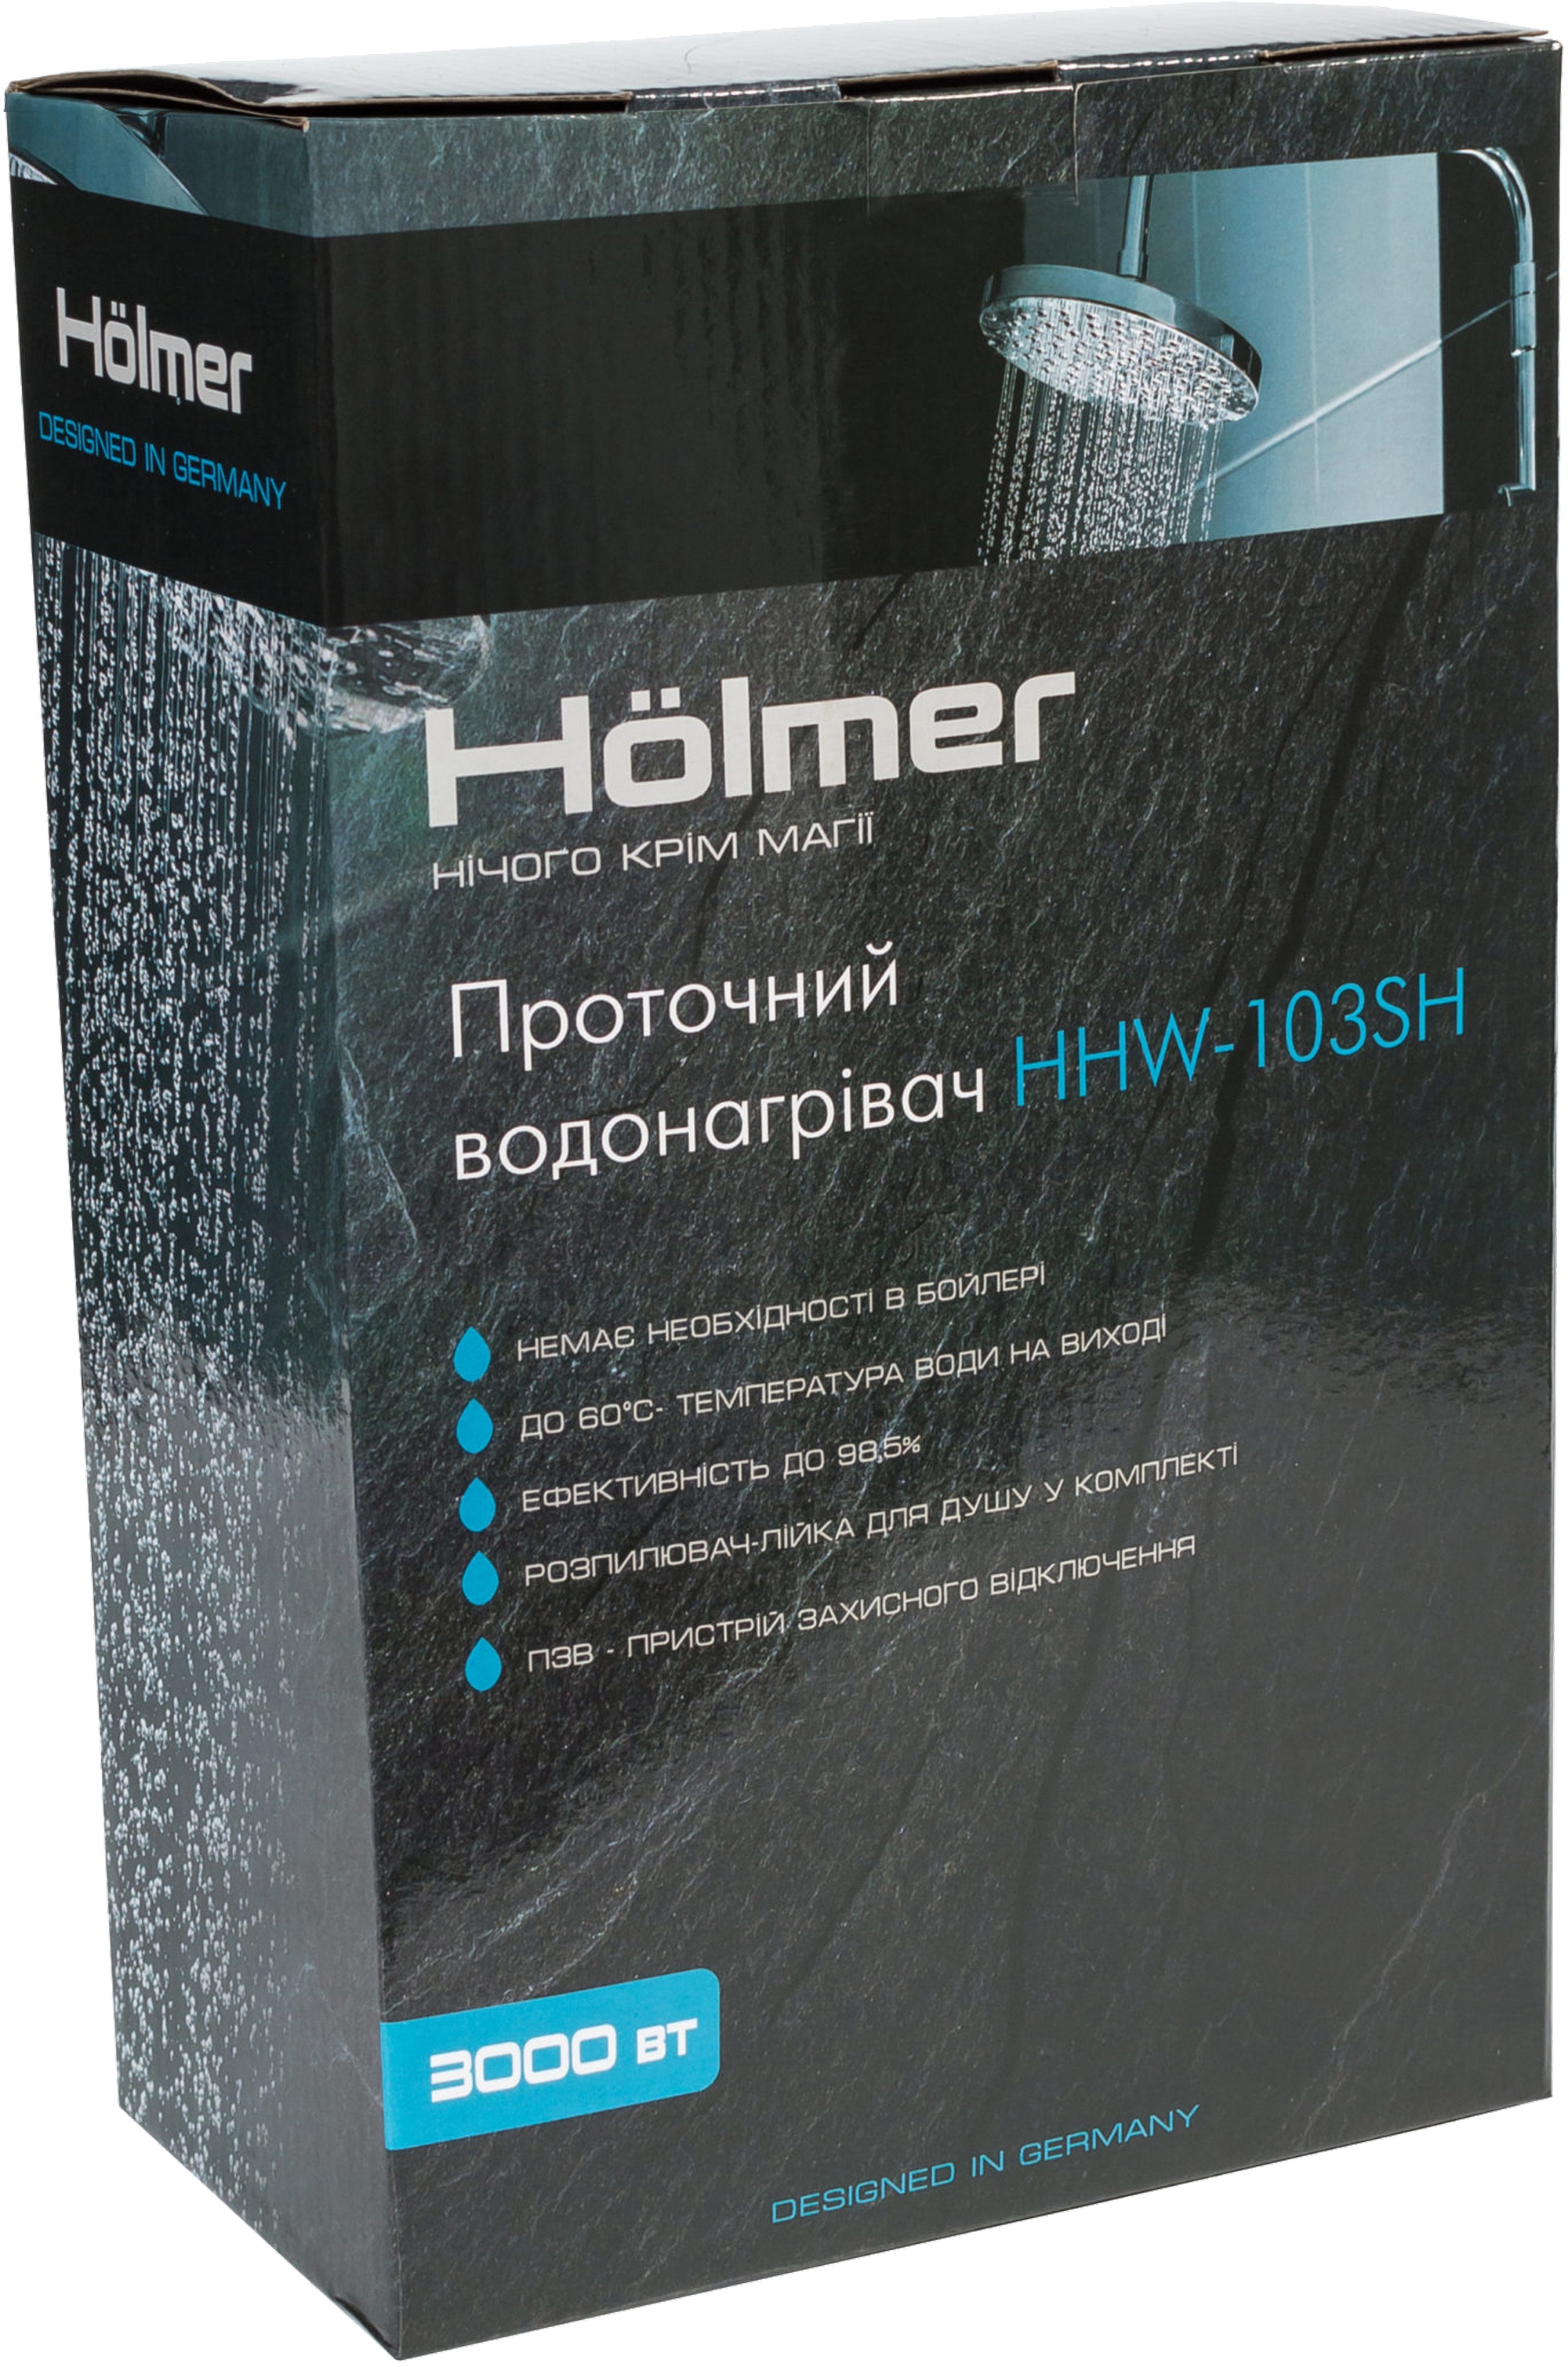 продаём Holmer HHW-103SH в Украине - фото 4